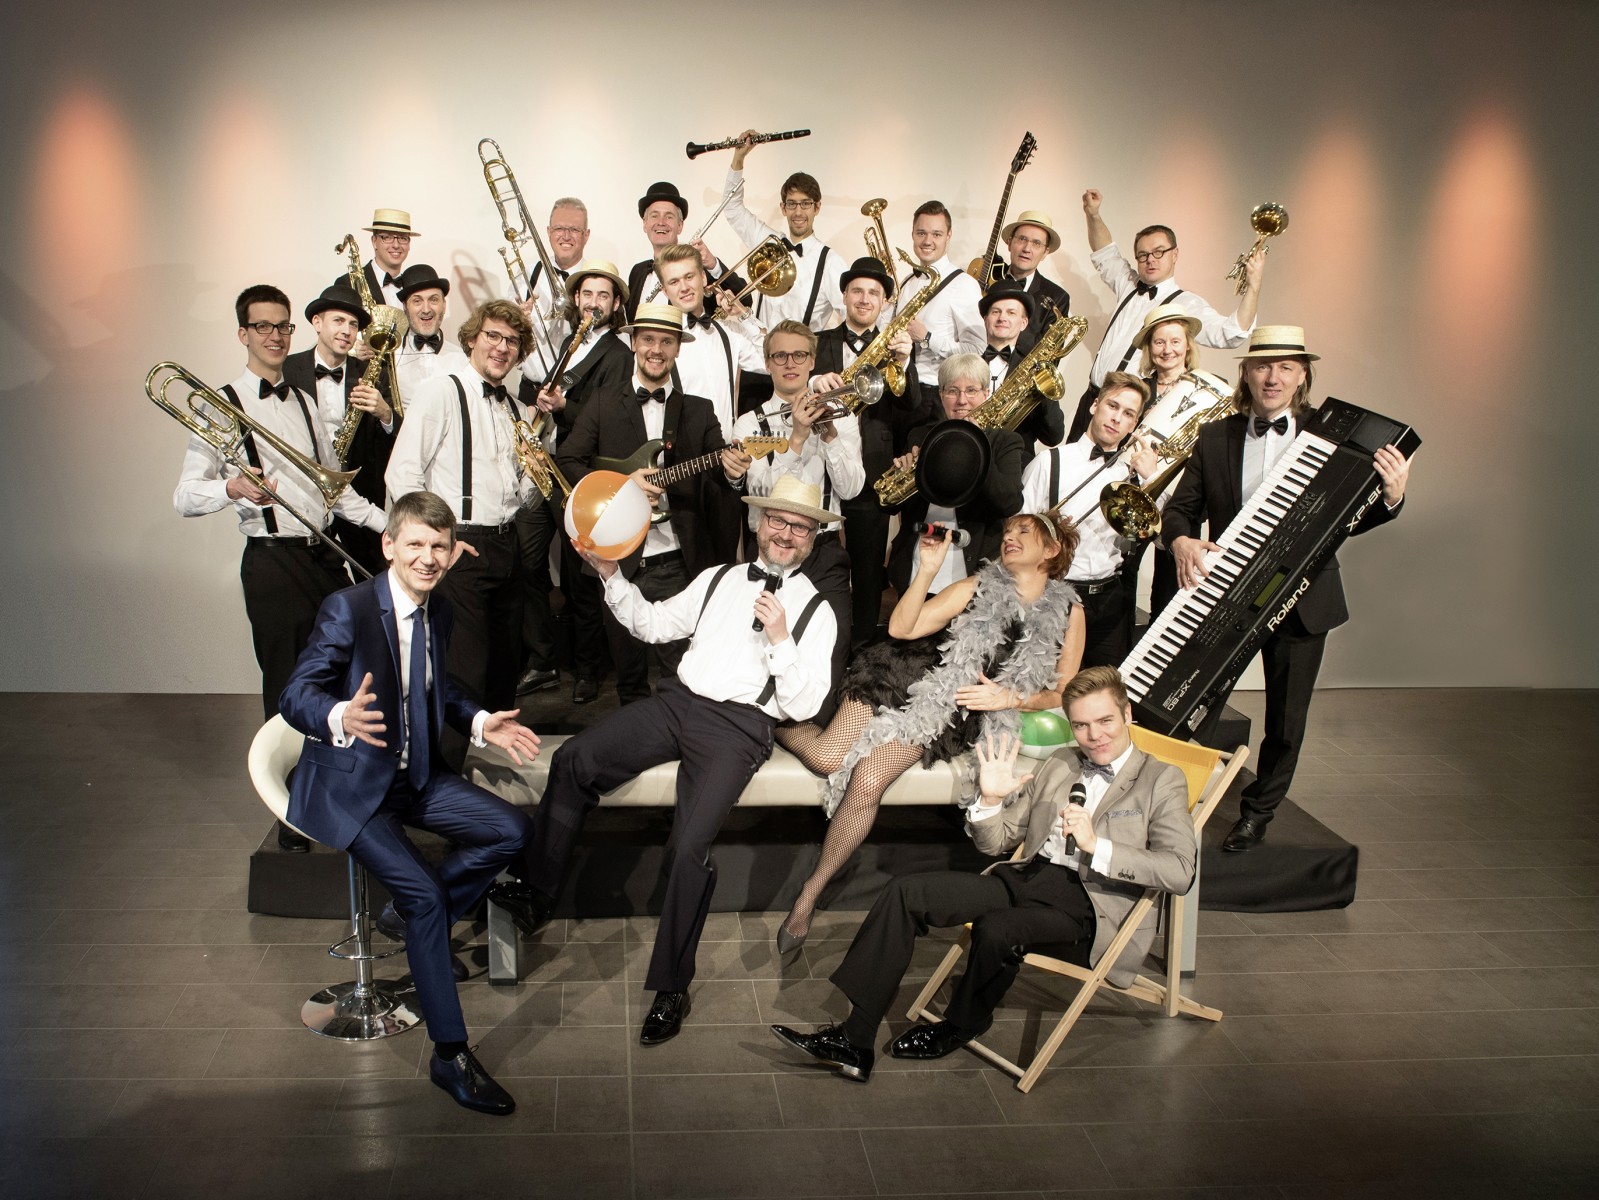 ENTFÄLLT Westfalia Big Band in Ahrensburg 2022 - Union Reiseteam 